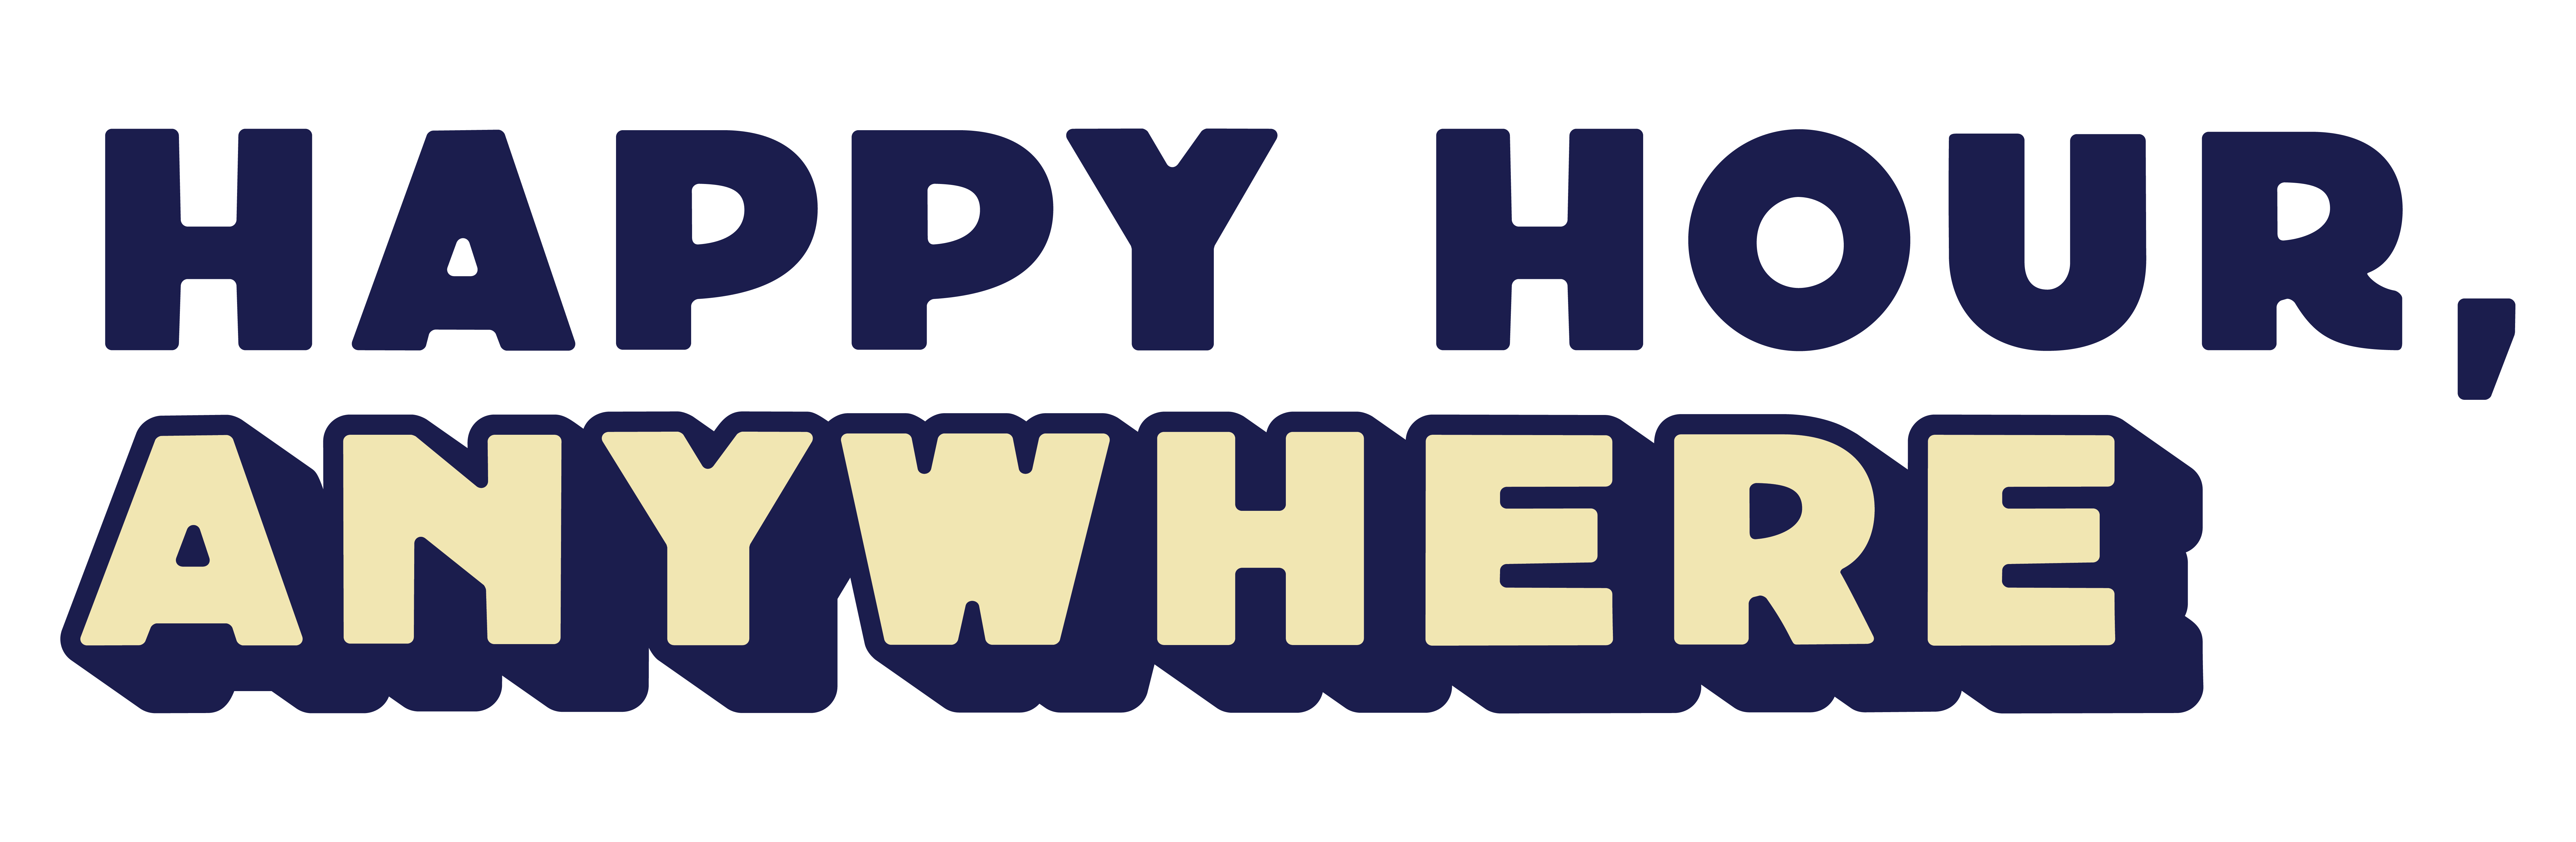 HappyHourAnywhere-01